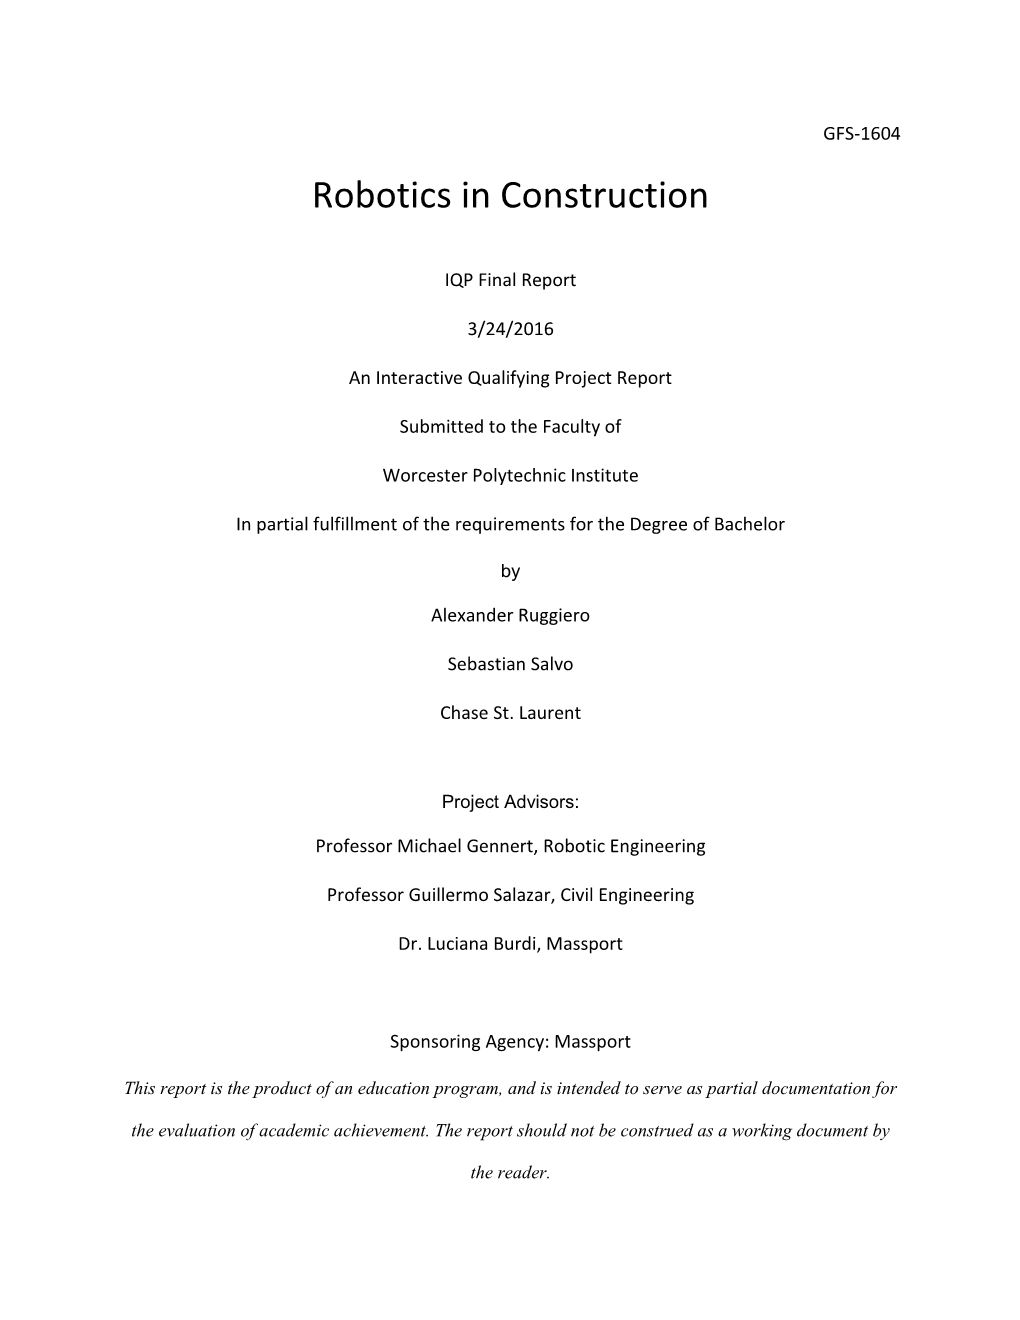 Robotics in Construction